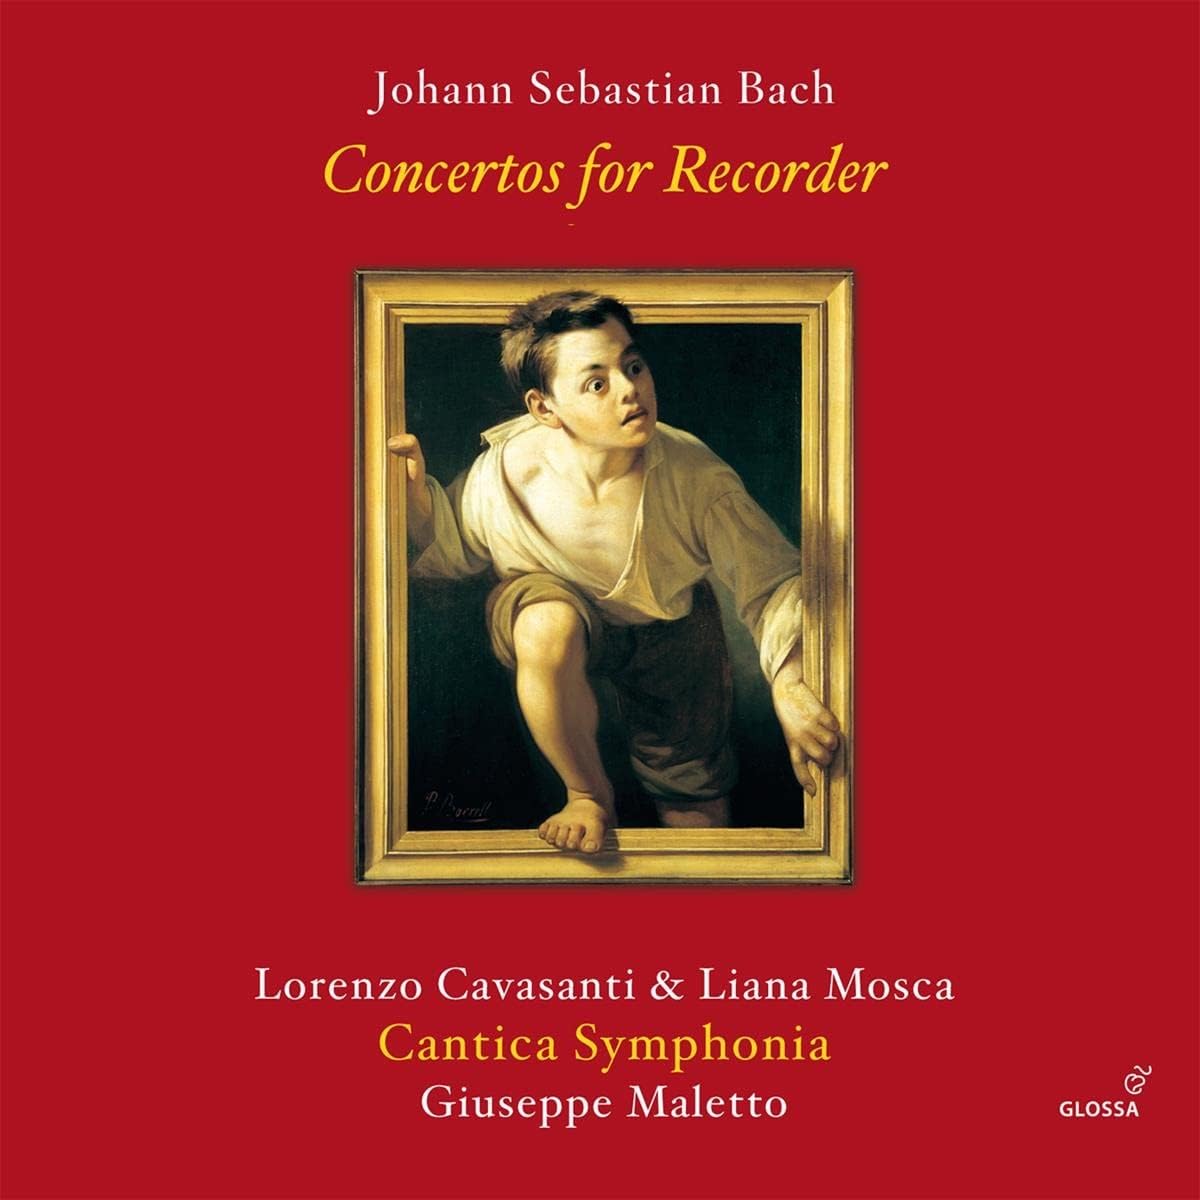 johann-sebastian-bach-cantica-symphonia